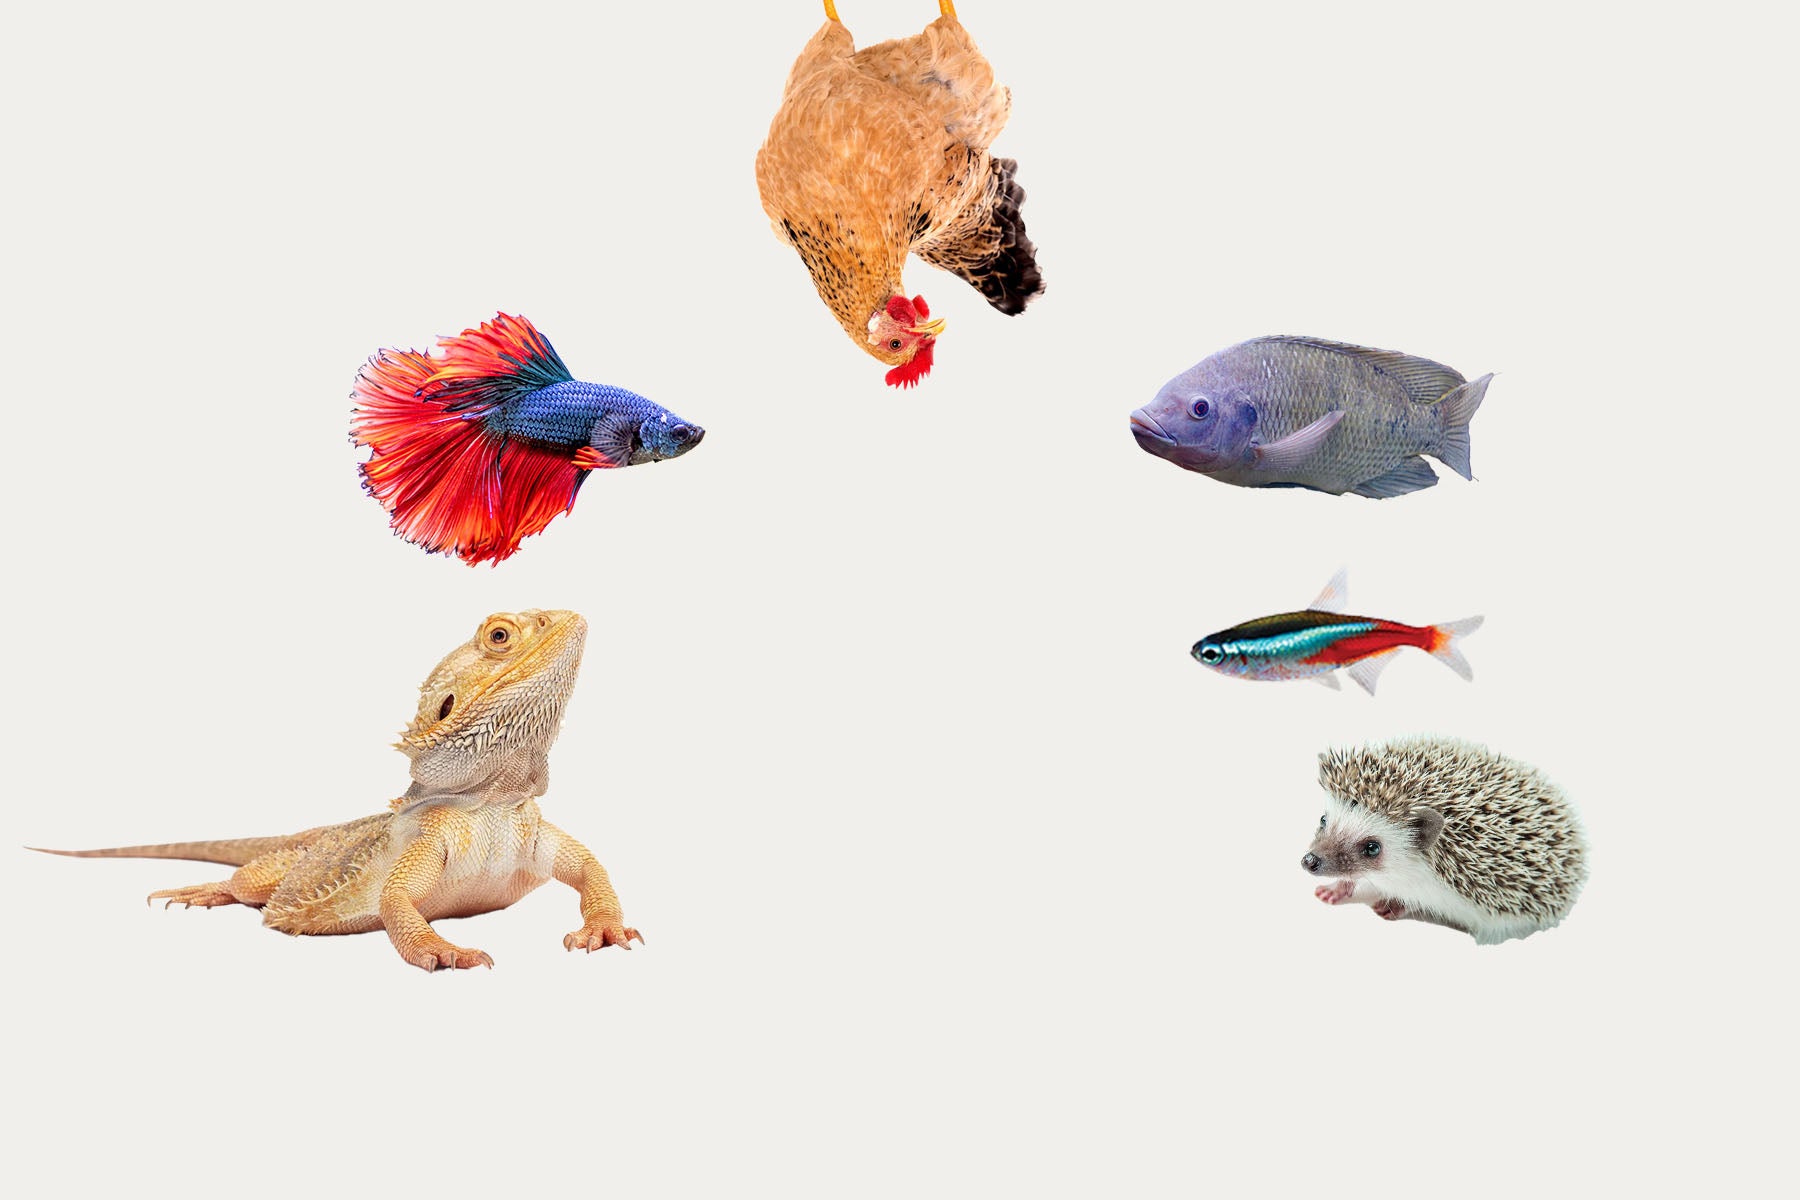 Bearded dragon, beta fish, chicken, tilapia, tetra, and hedgehog on plain background.